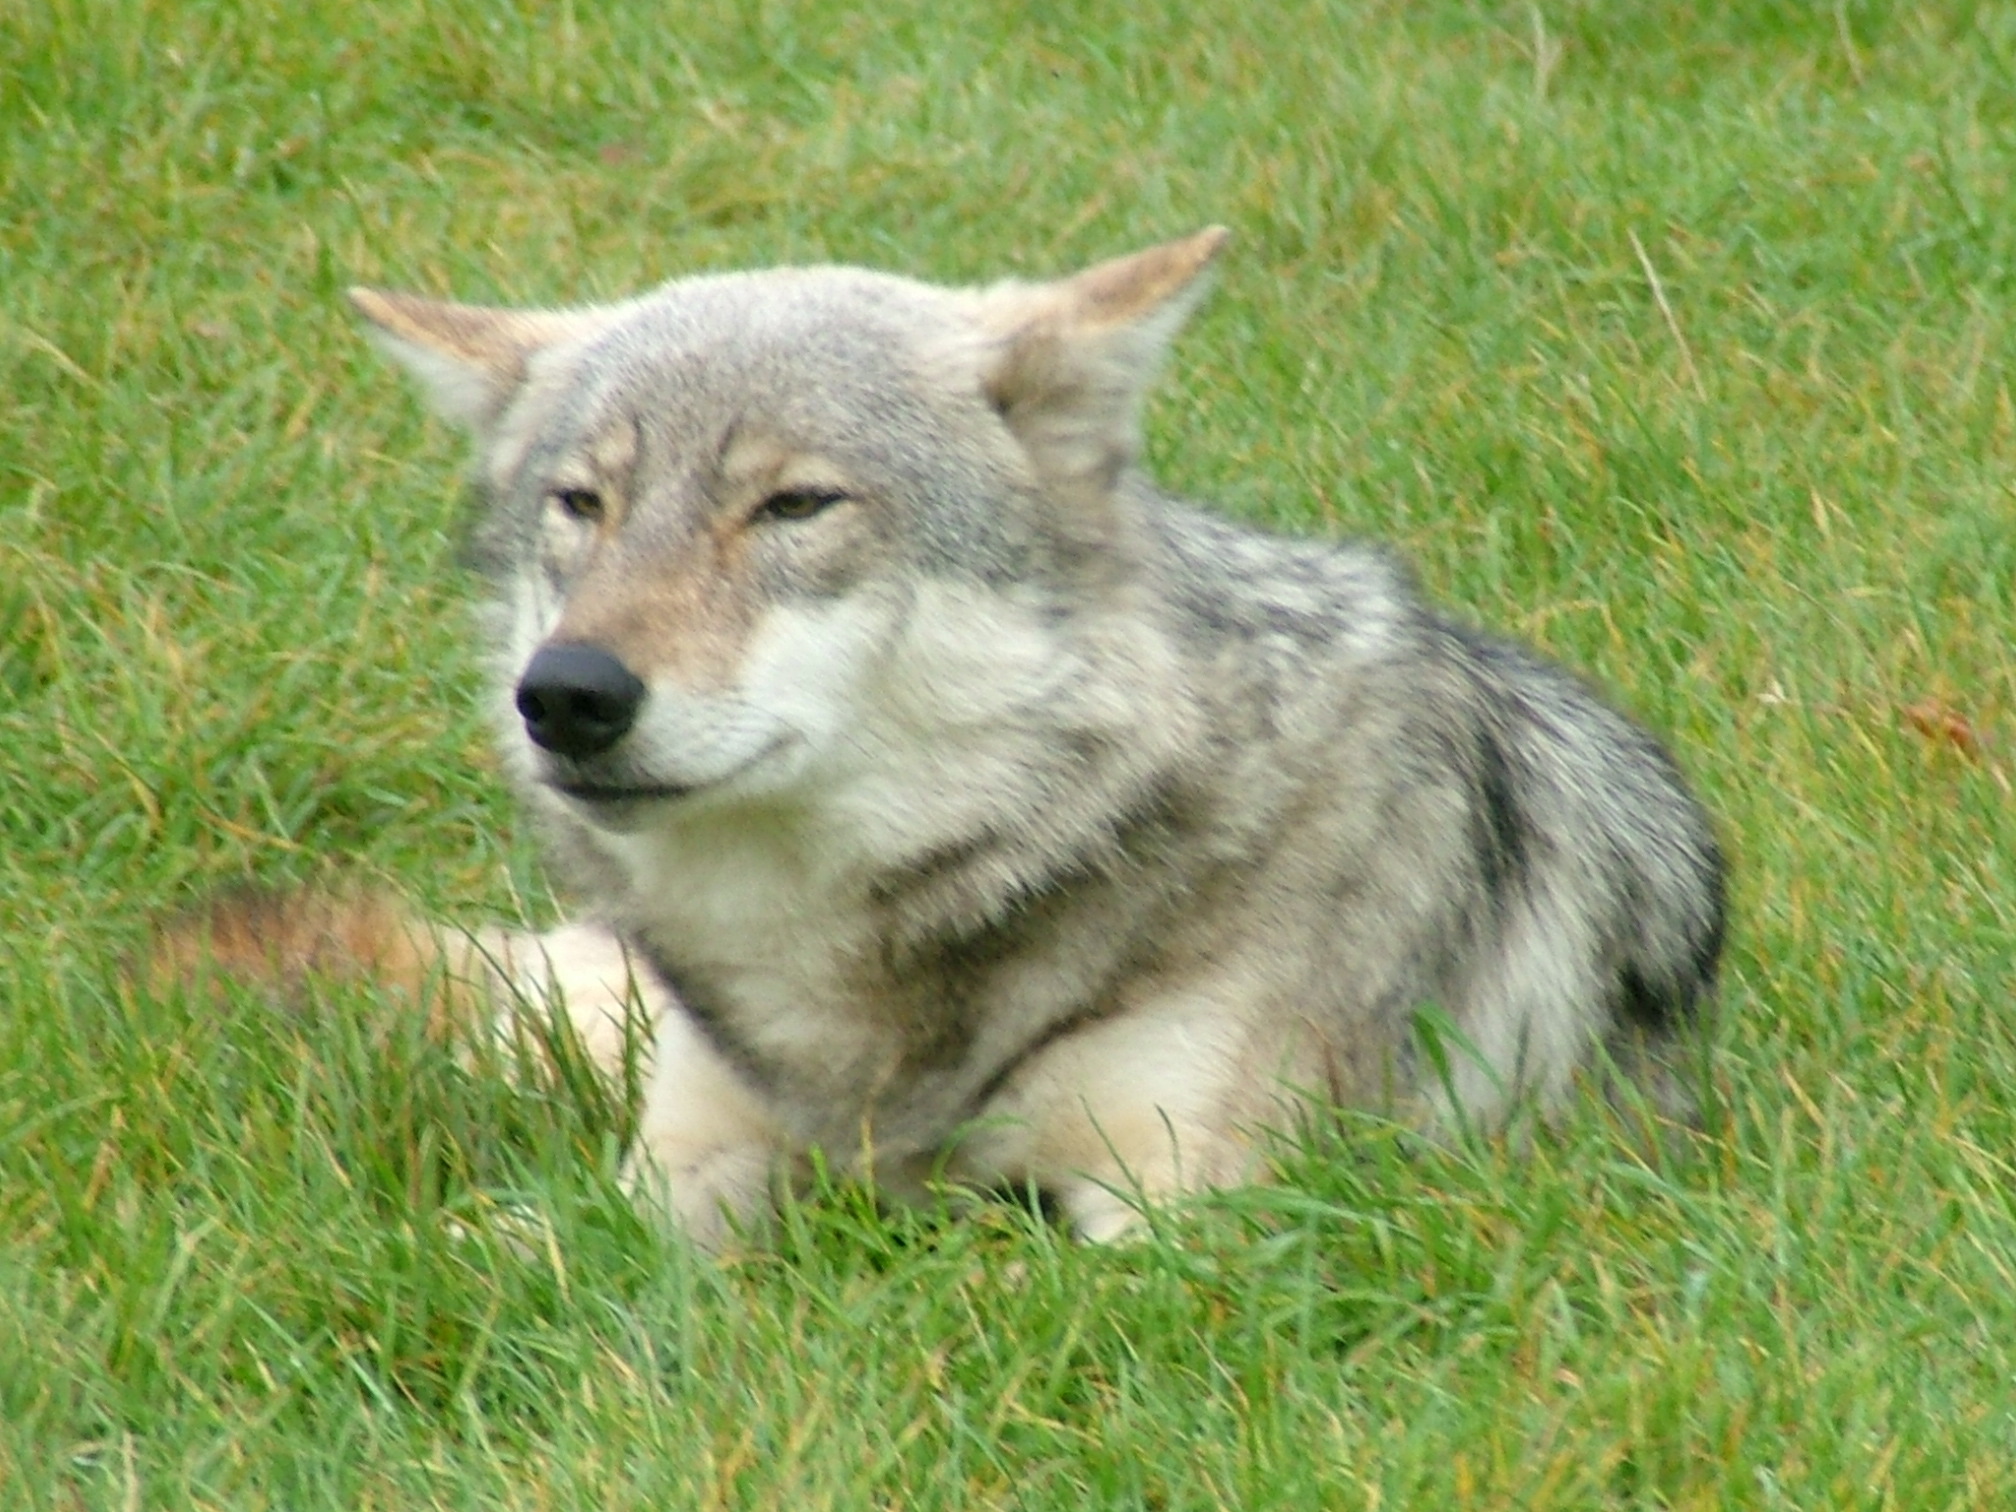 lonewolf